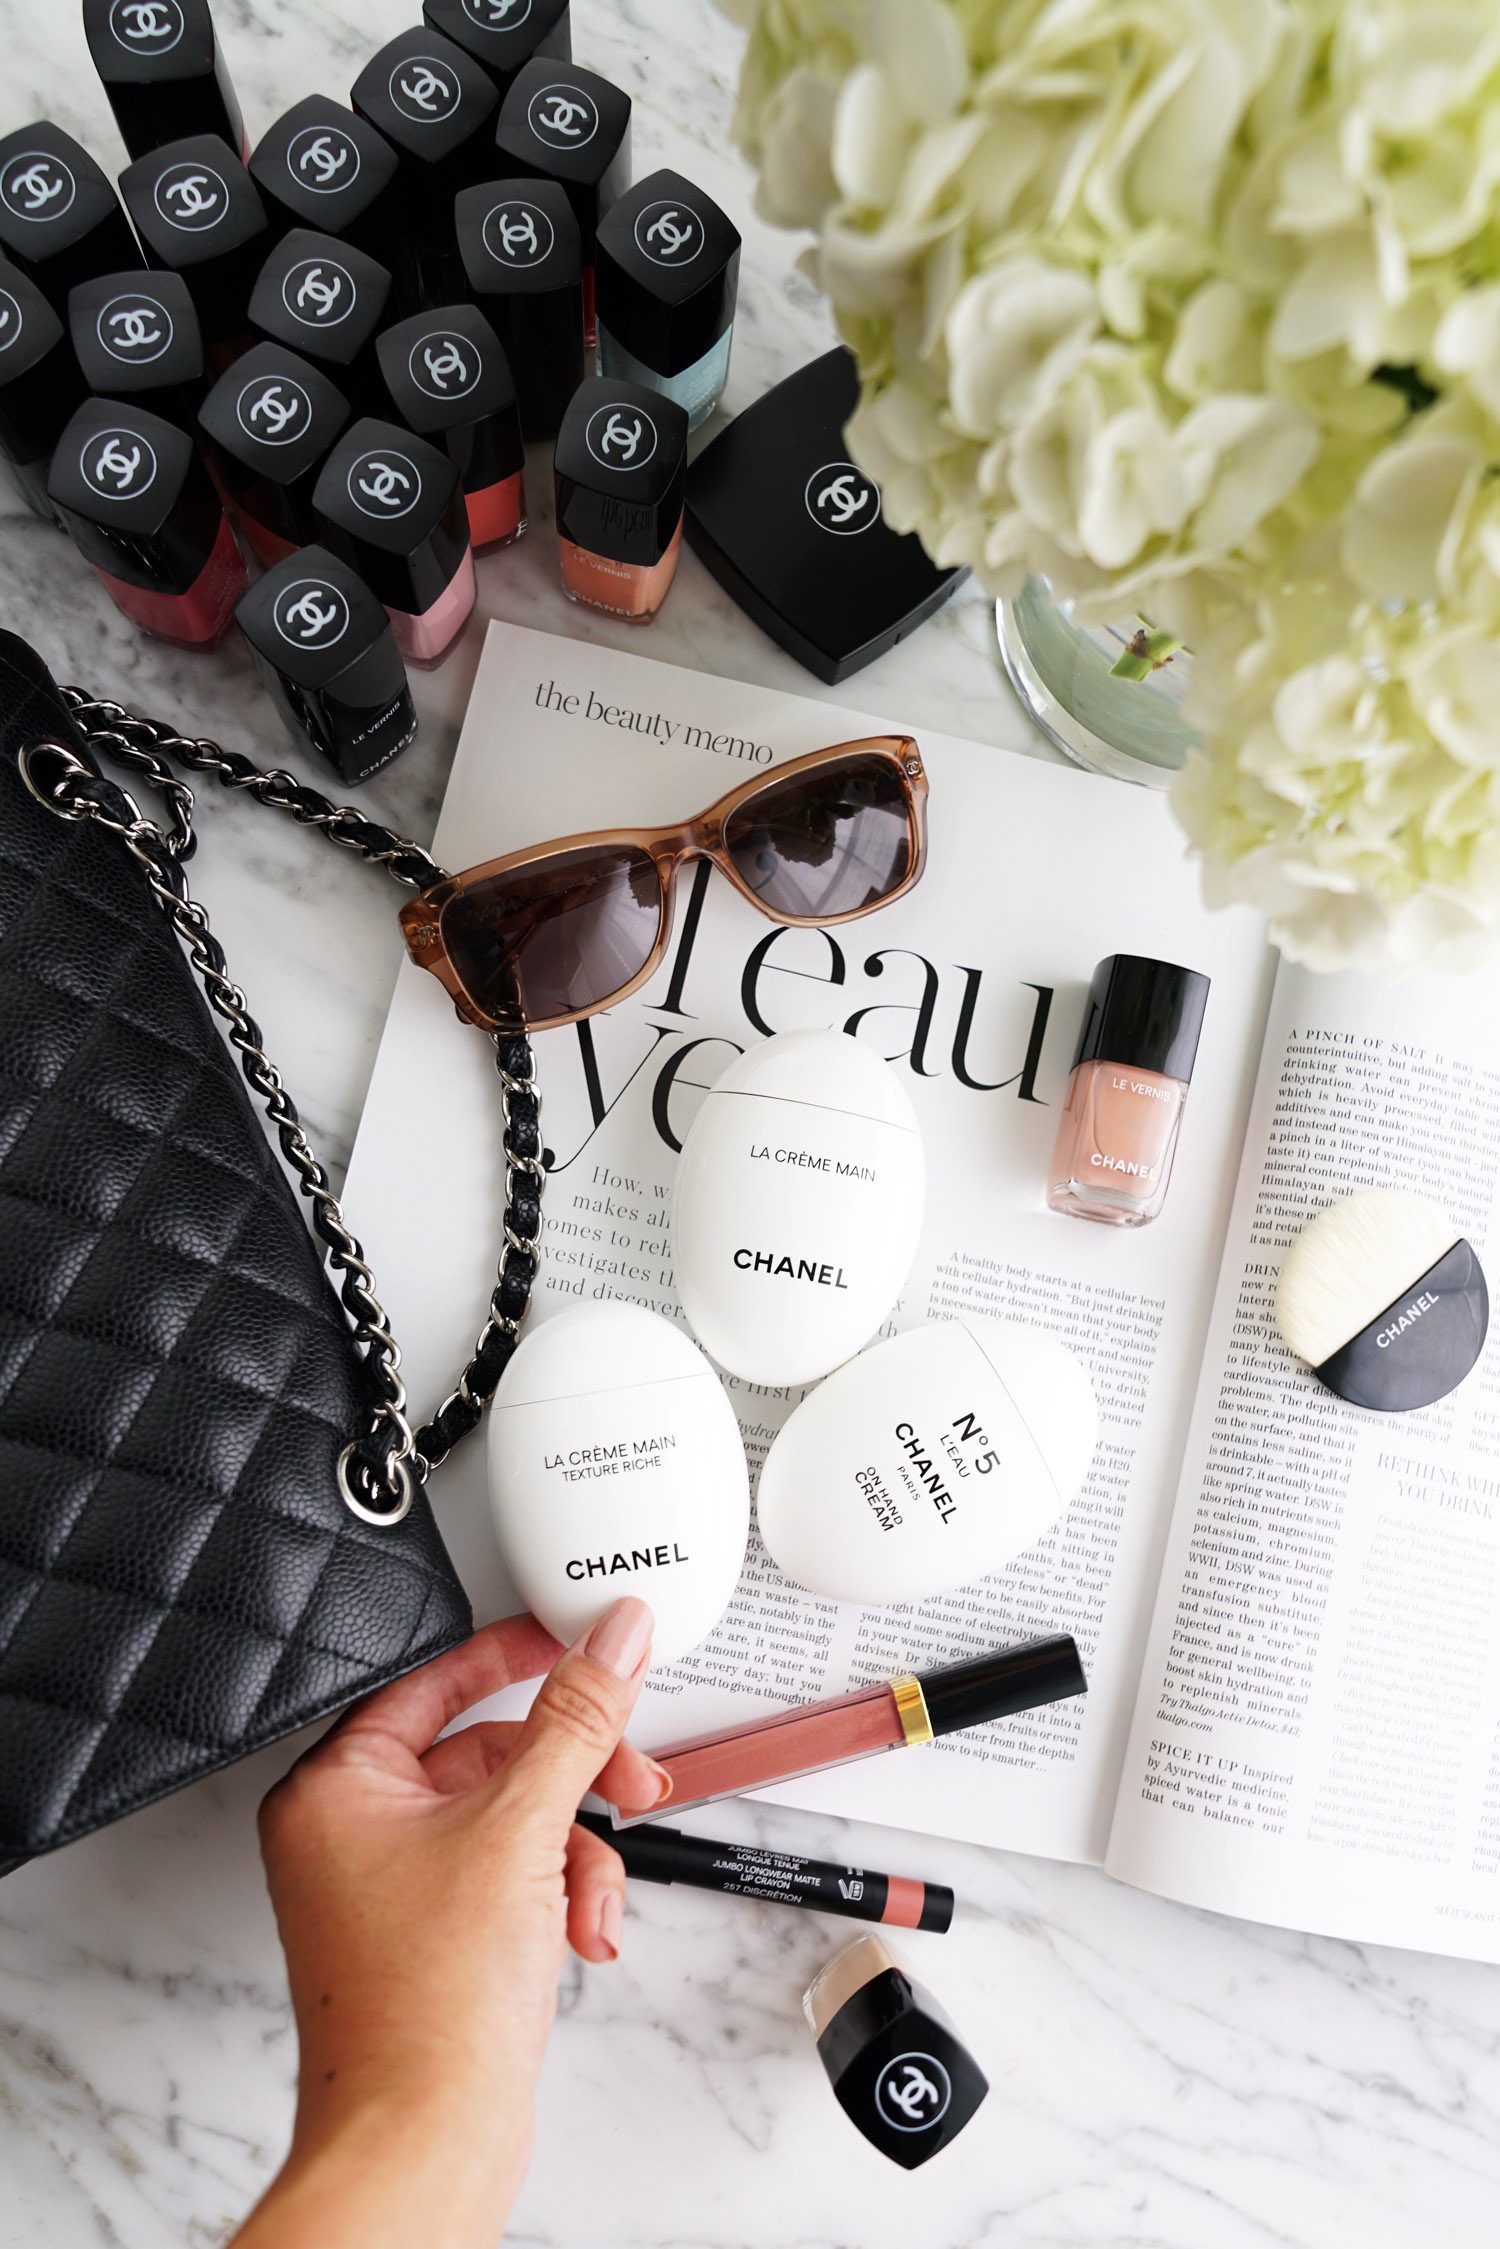 Chanel Cream Review: La Creme Texture Riche and 5 L'Eau - The Beauty Look Book